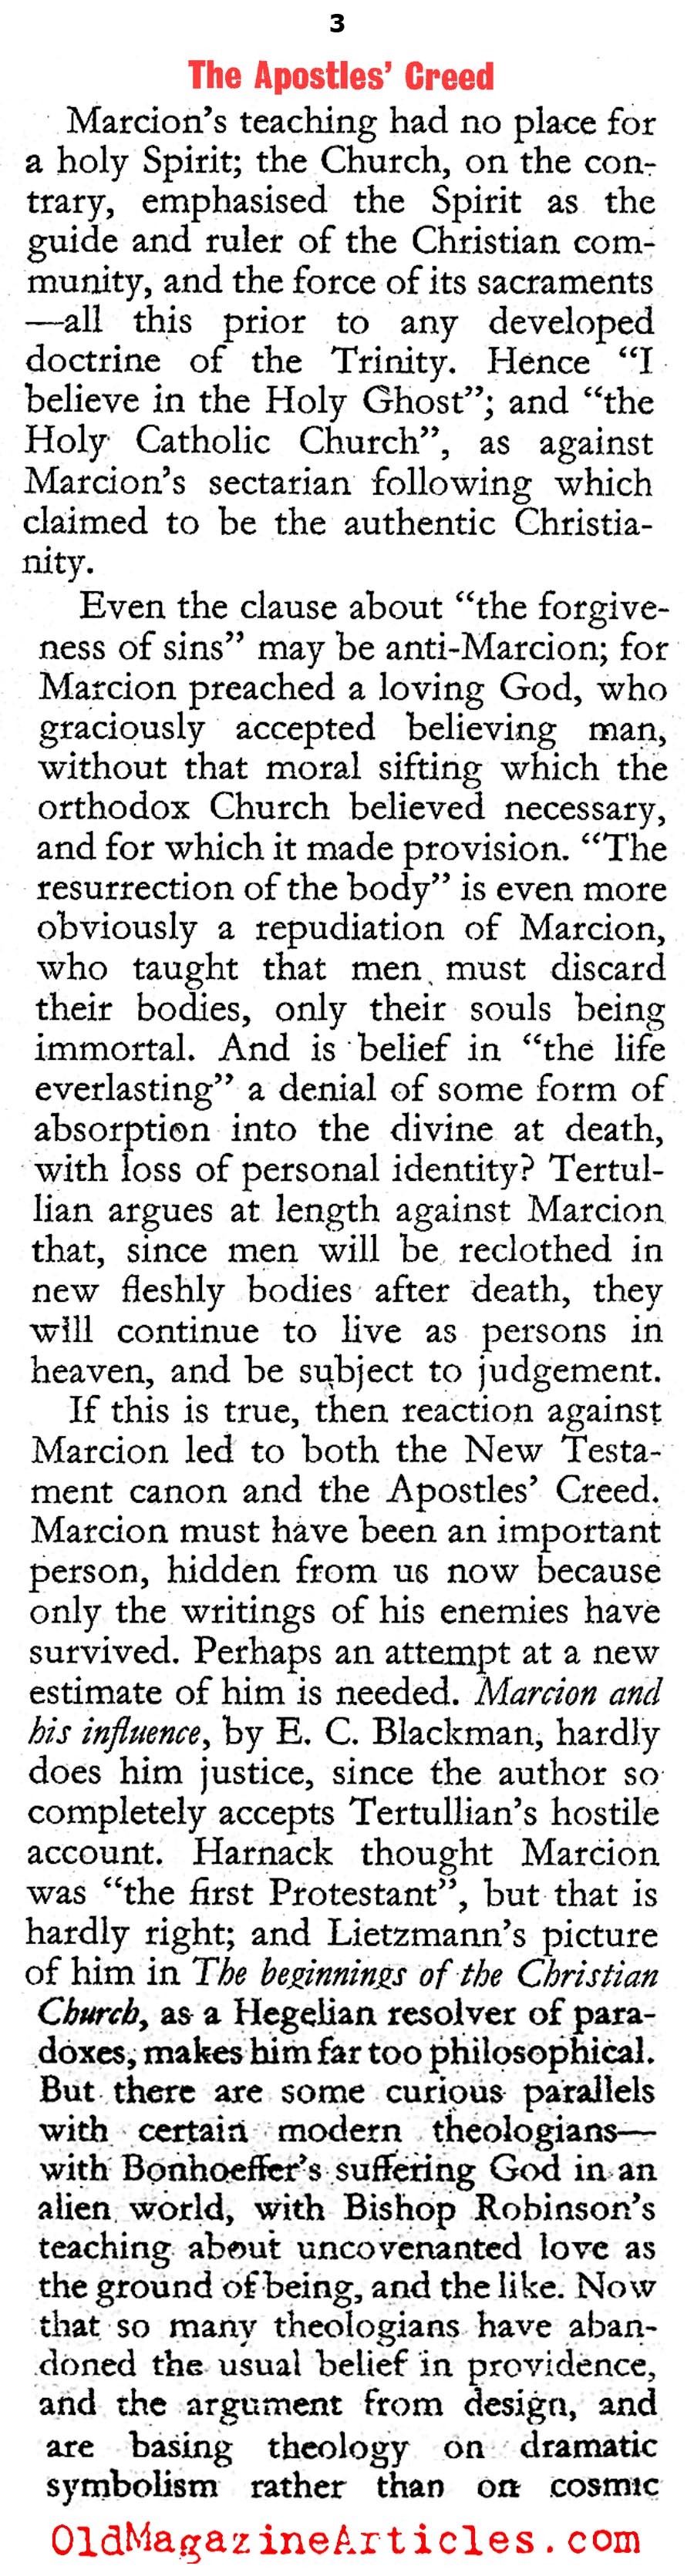 The Apostles' Creed (The Hibbert Journal, 1966)